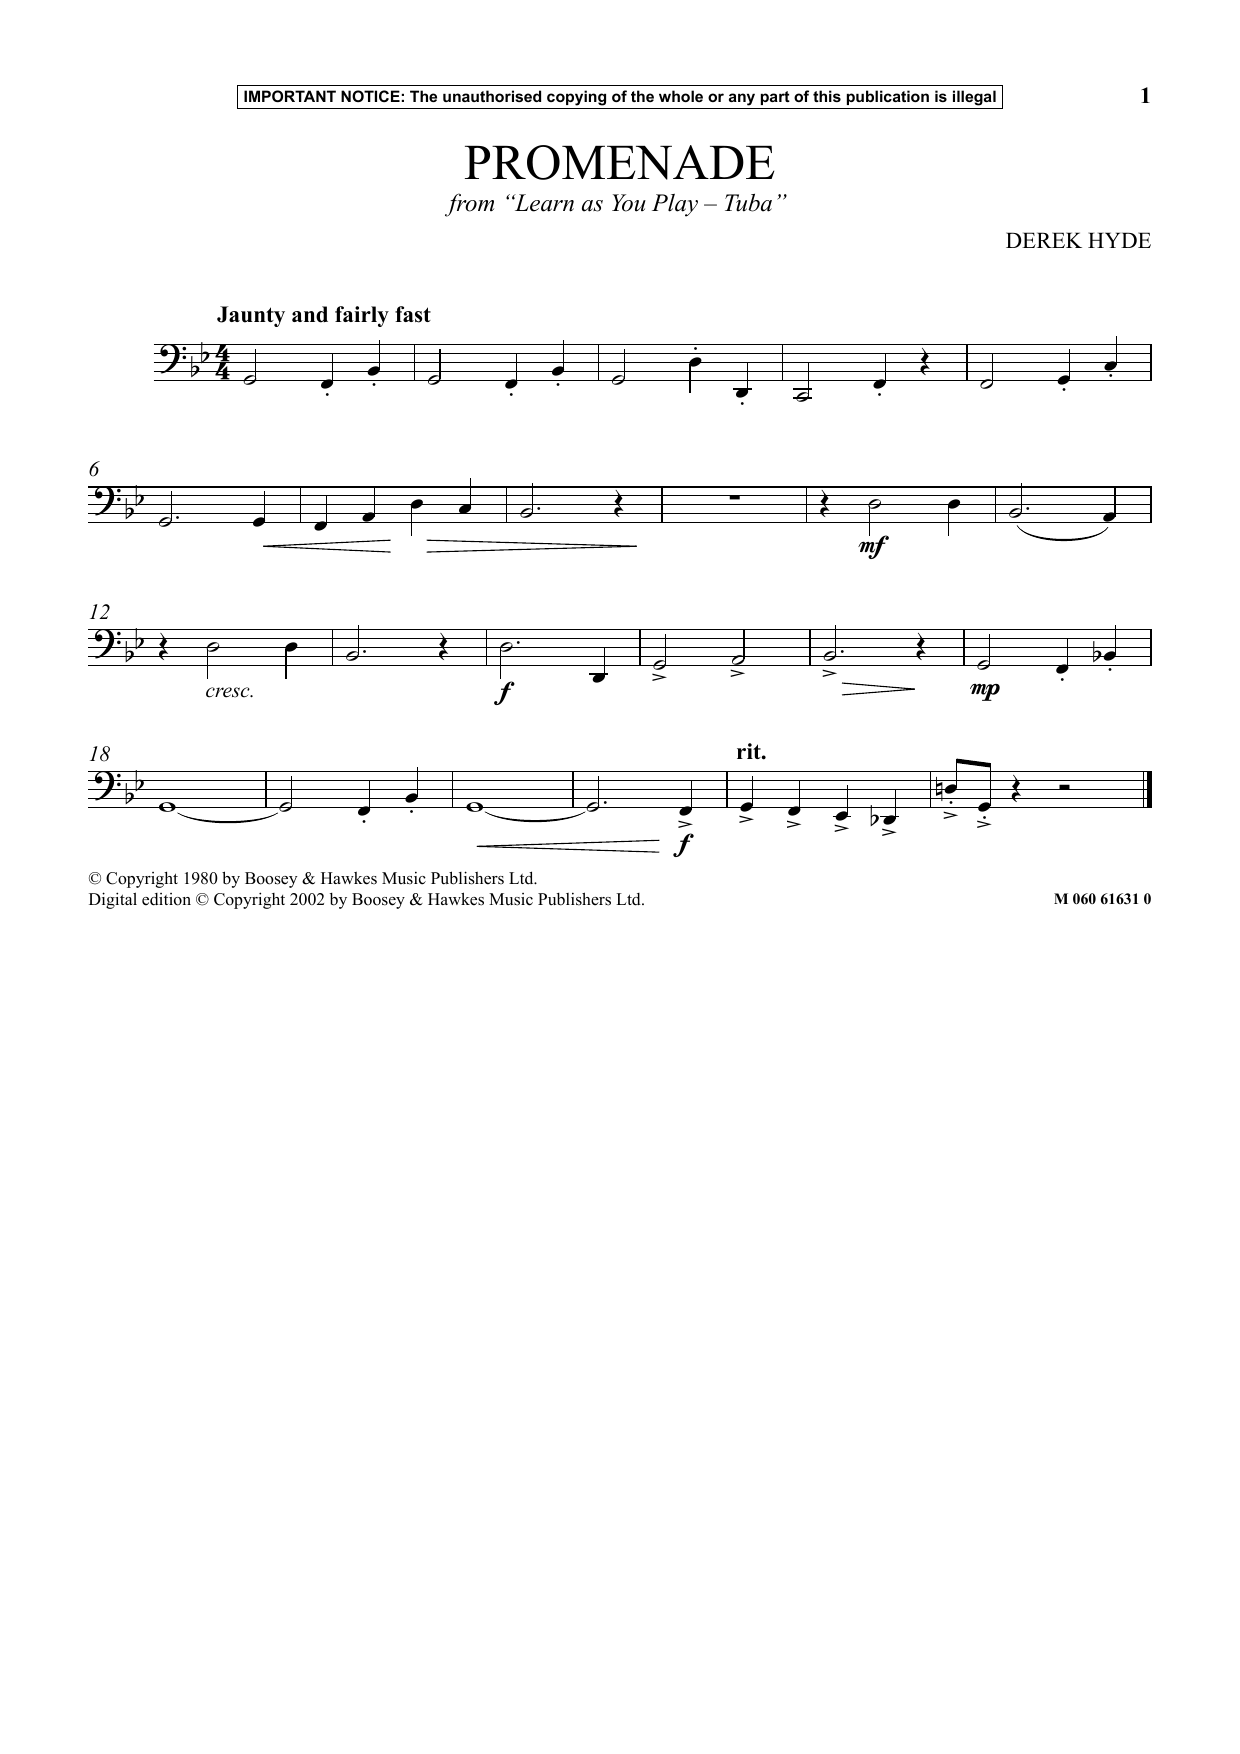 Download Derek Hyde Promenade (from Learn As You Play Tuba) Sheet Music